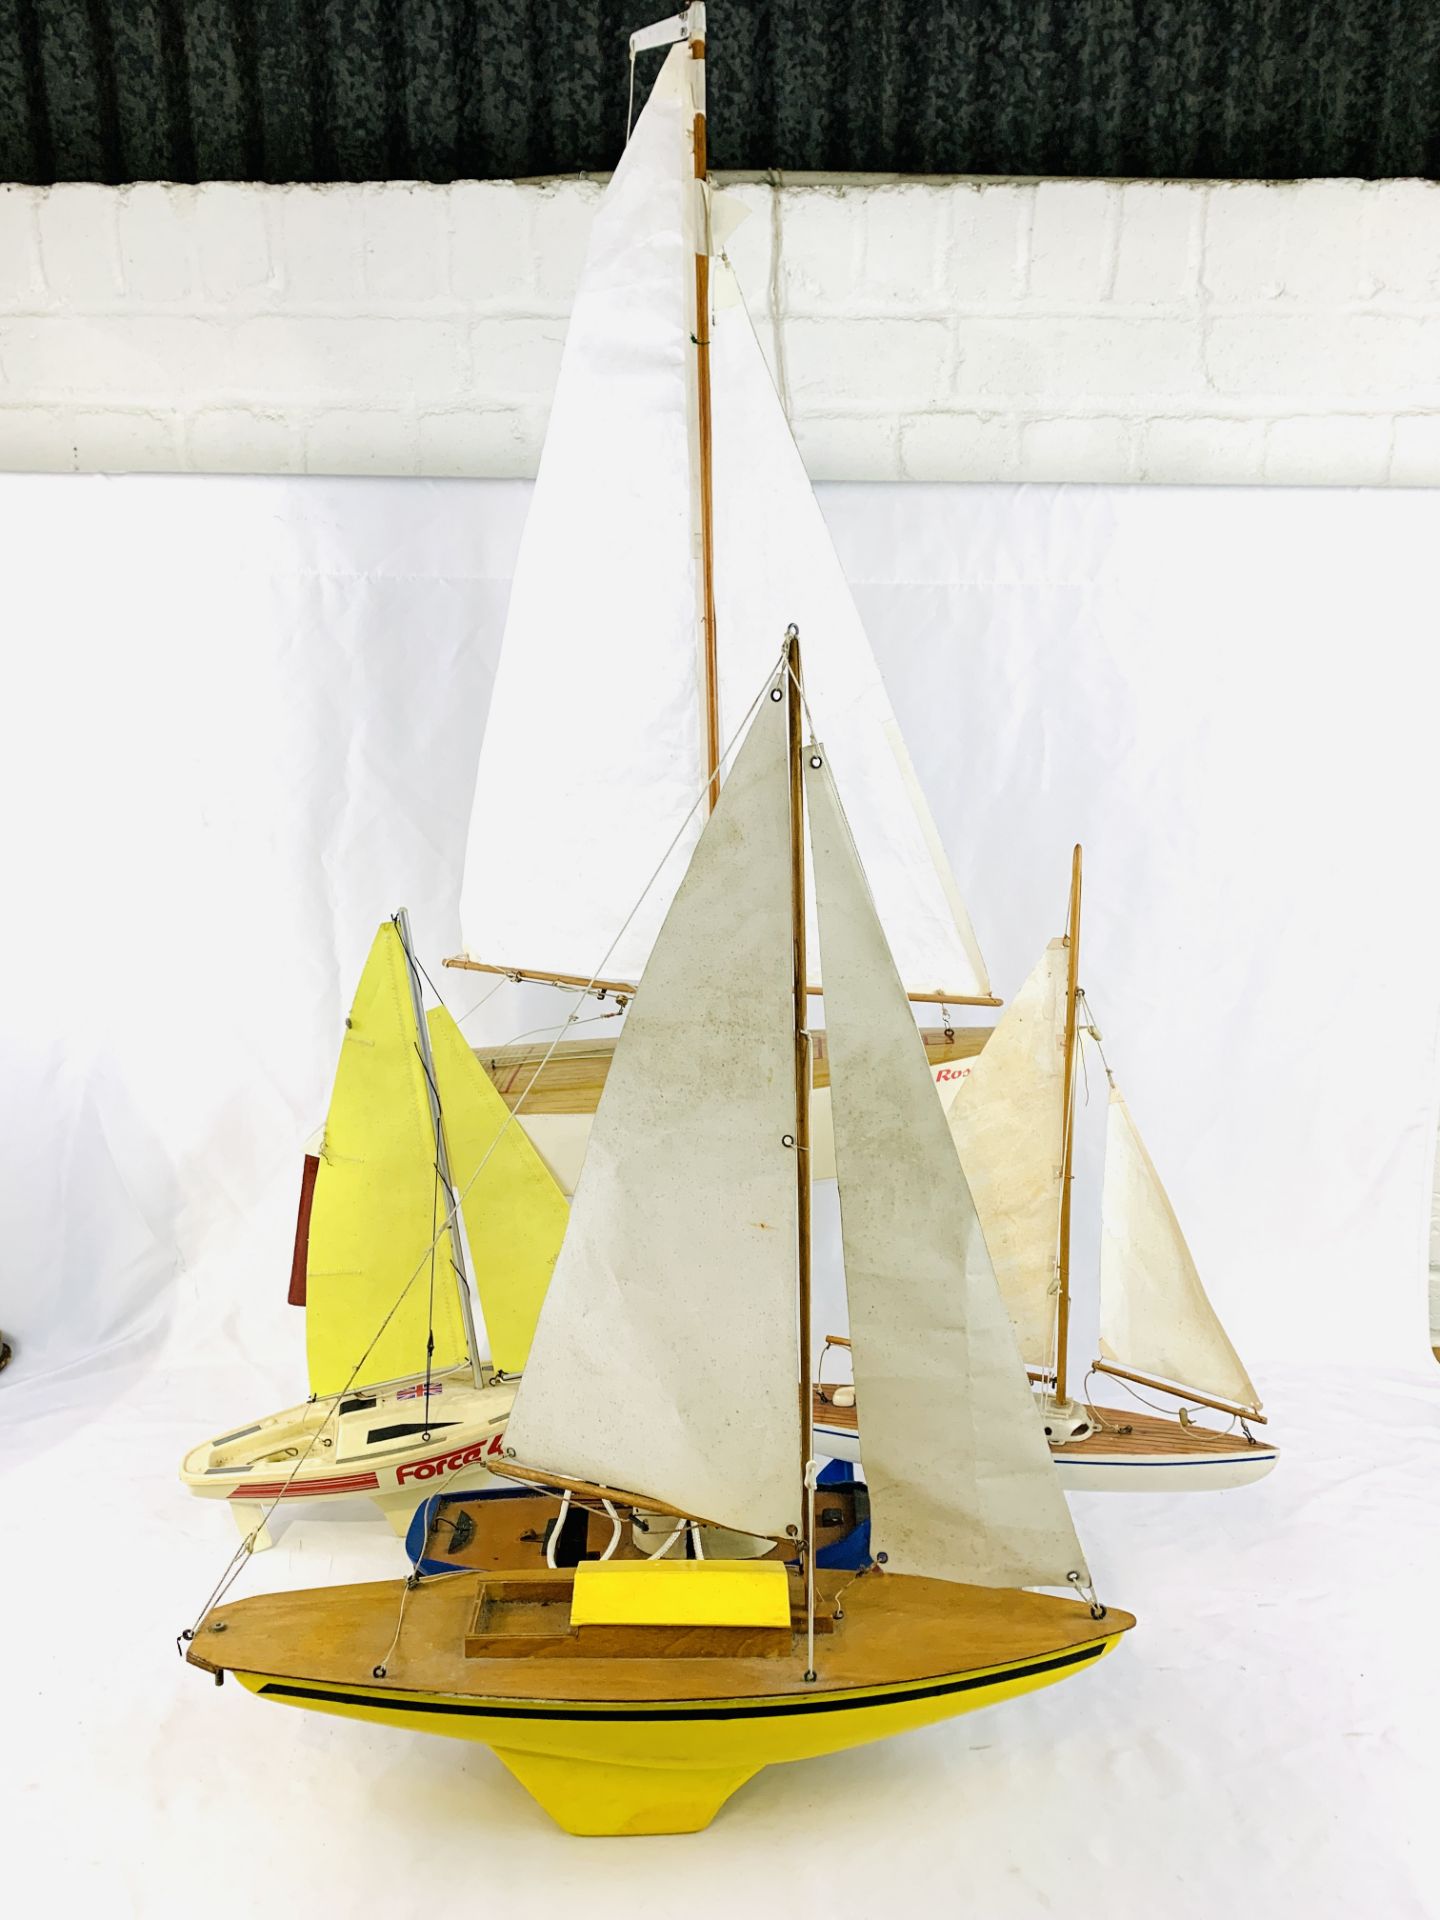 Five small model boats